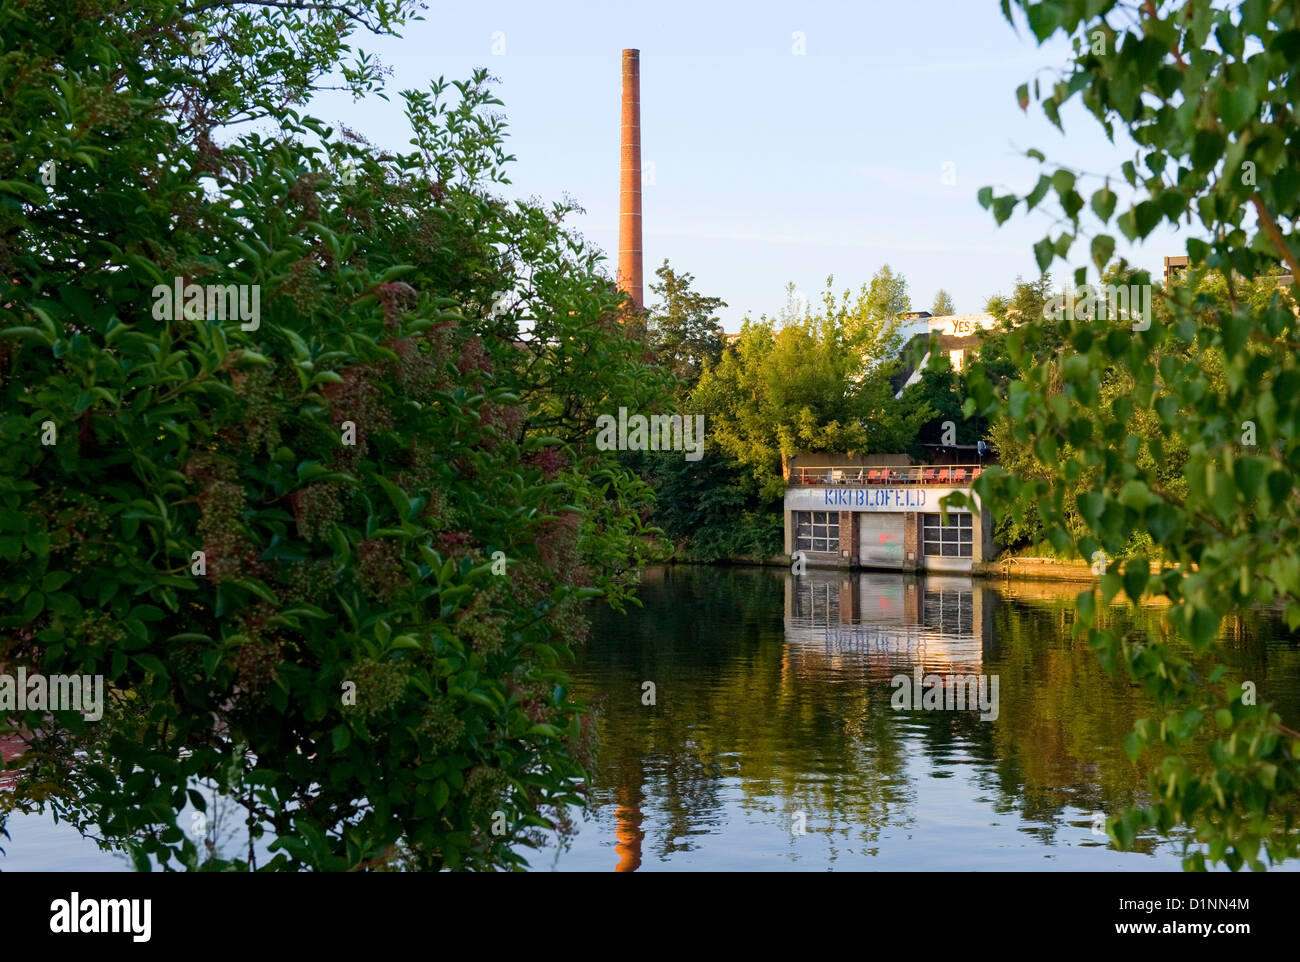 Berlin, Germany, overlooking the Spree scene locality of Kiki Blofeld Stock Photo